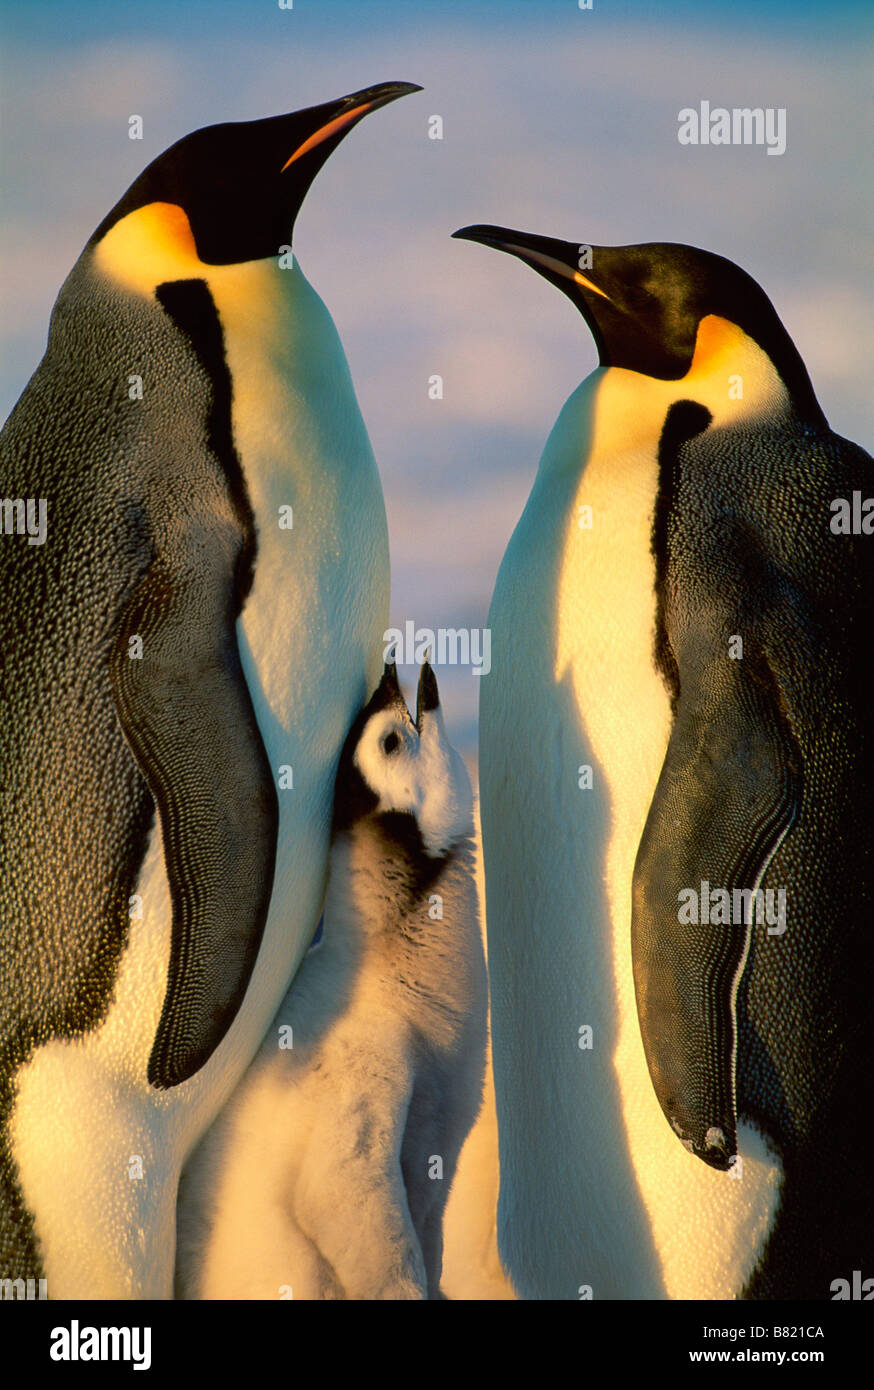 Hungry baby penguin -Fotos und -Bildmaterial in hoher Auflösung – Alamy